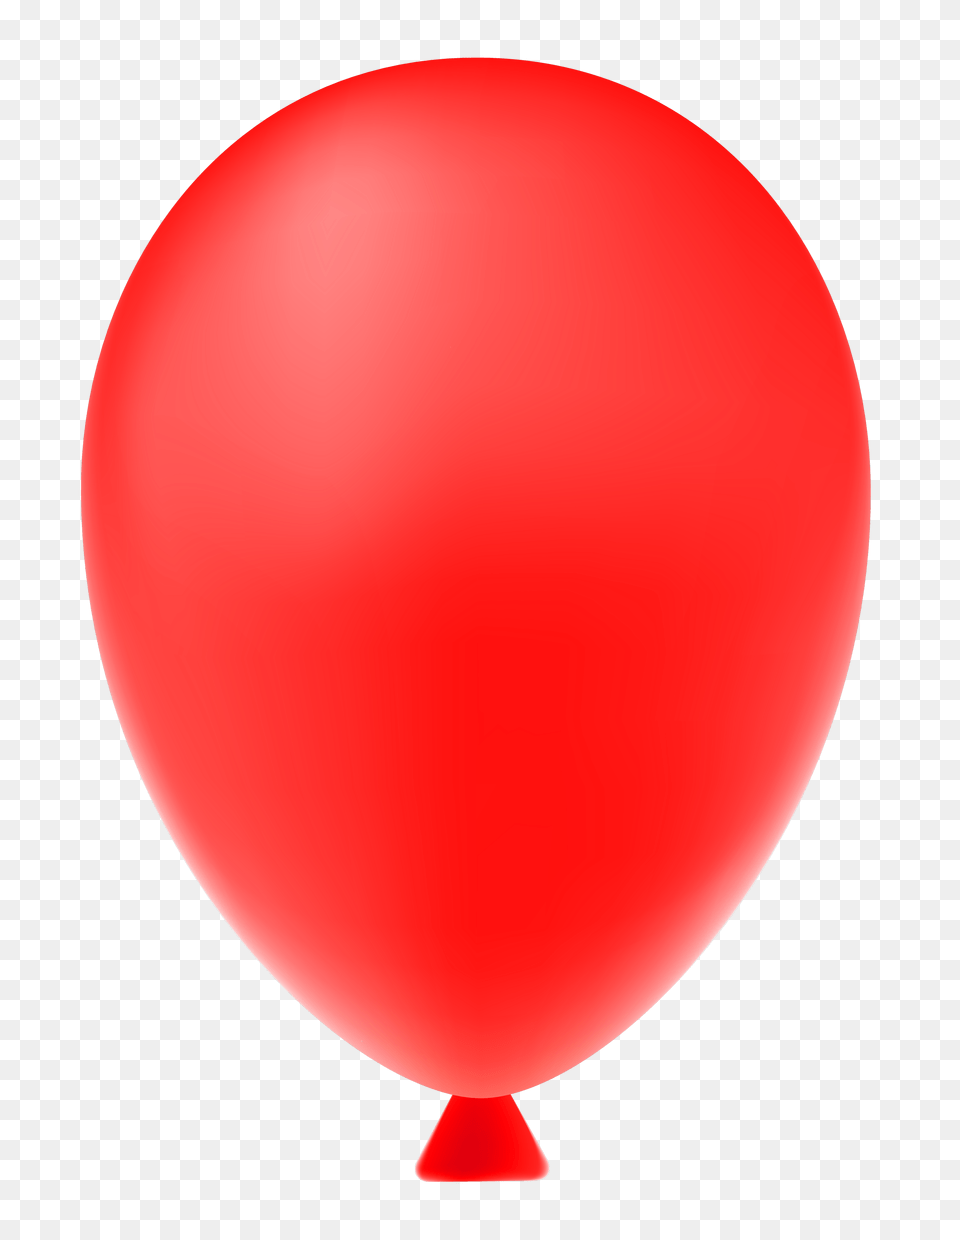 Pngpix Com Red Balloon Image, Hot Tub, Tub Free Png Download